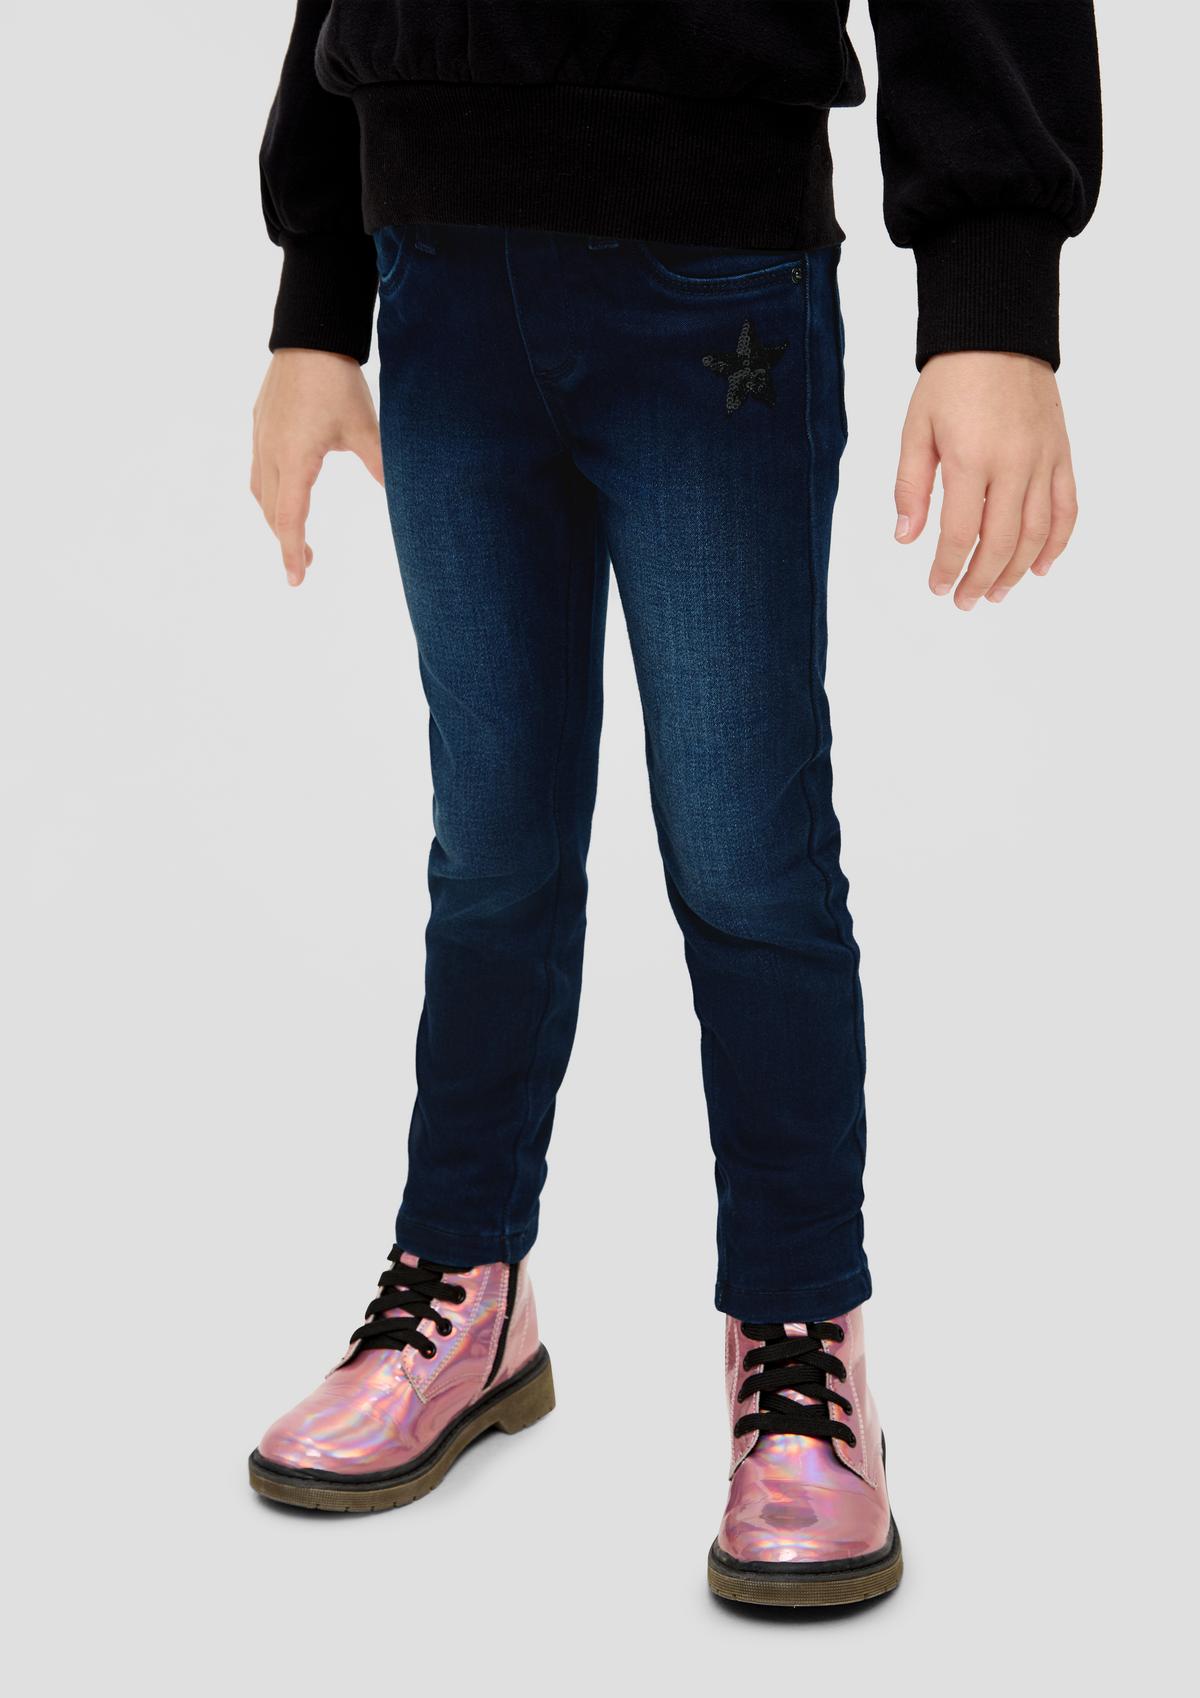 Jeans tregging / slim fit / high rise / slim leg / ster van pailletjes